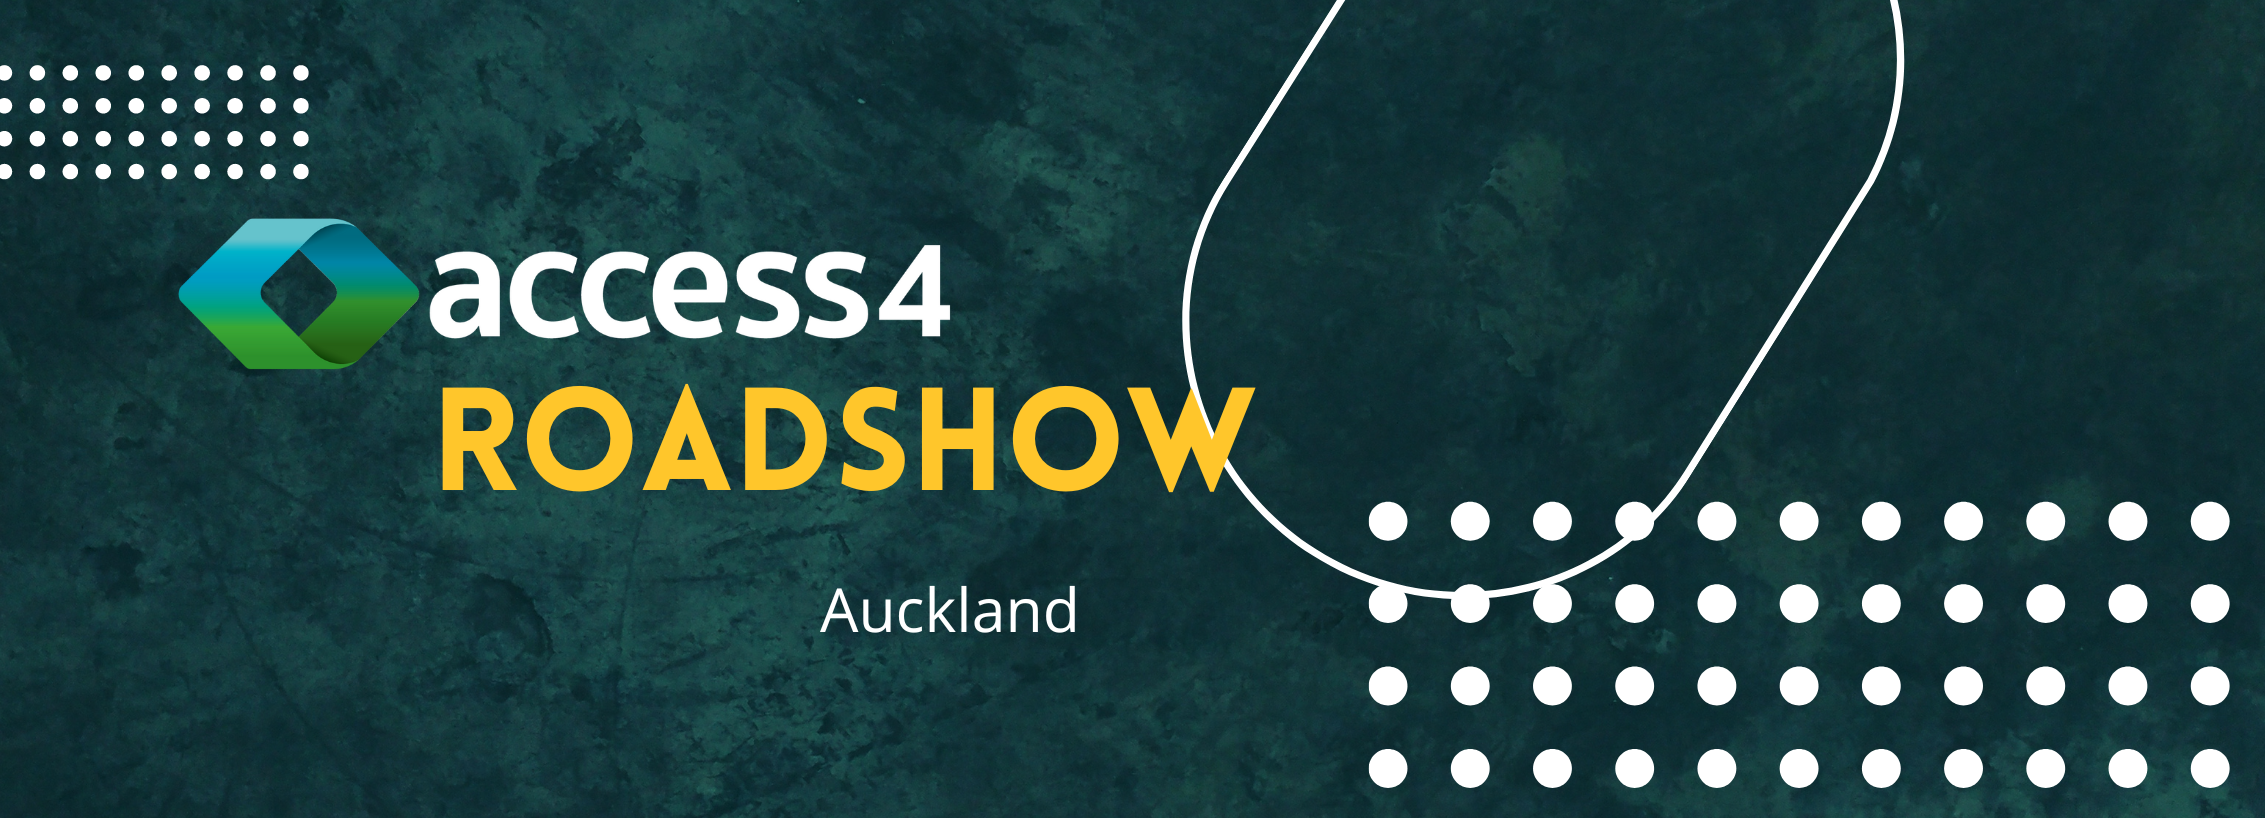 Access4 Roadshow Auckland